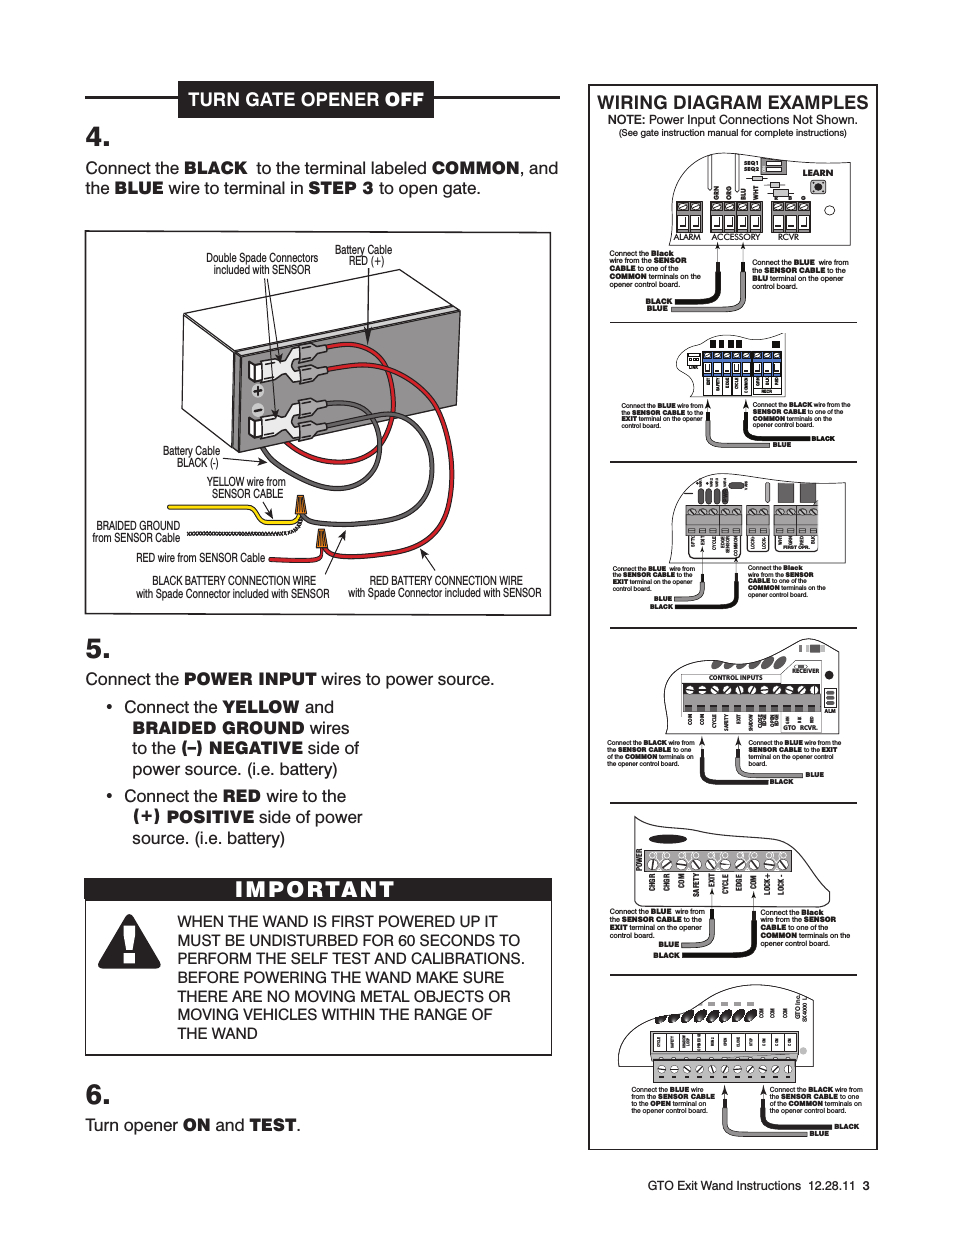 important turn gate opener off wiring diagram examples mighty gate opener wiring diagram gate opener wiring diagram